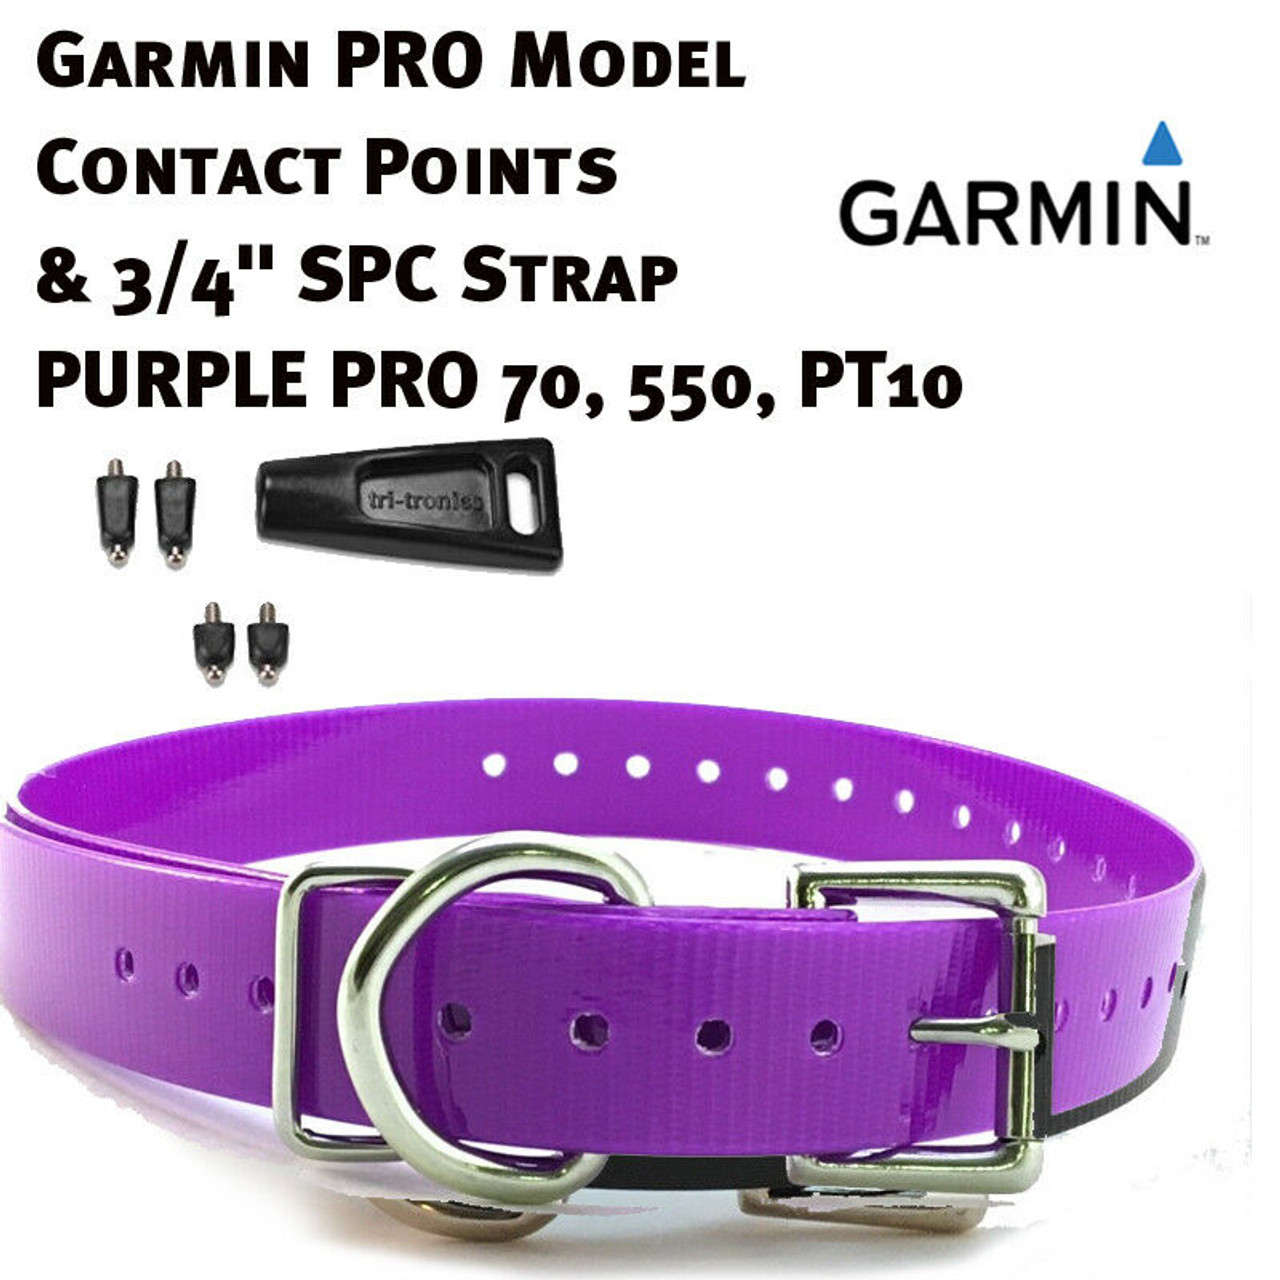 Garmin Pro Model Contact Points & 3/4 Sparky Pet Co Strap - Neon